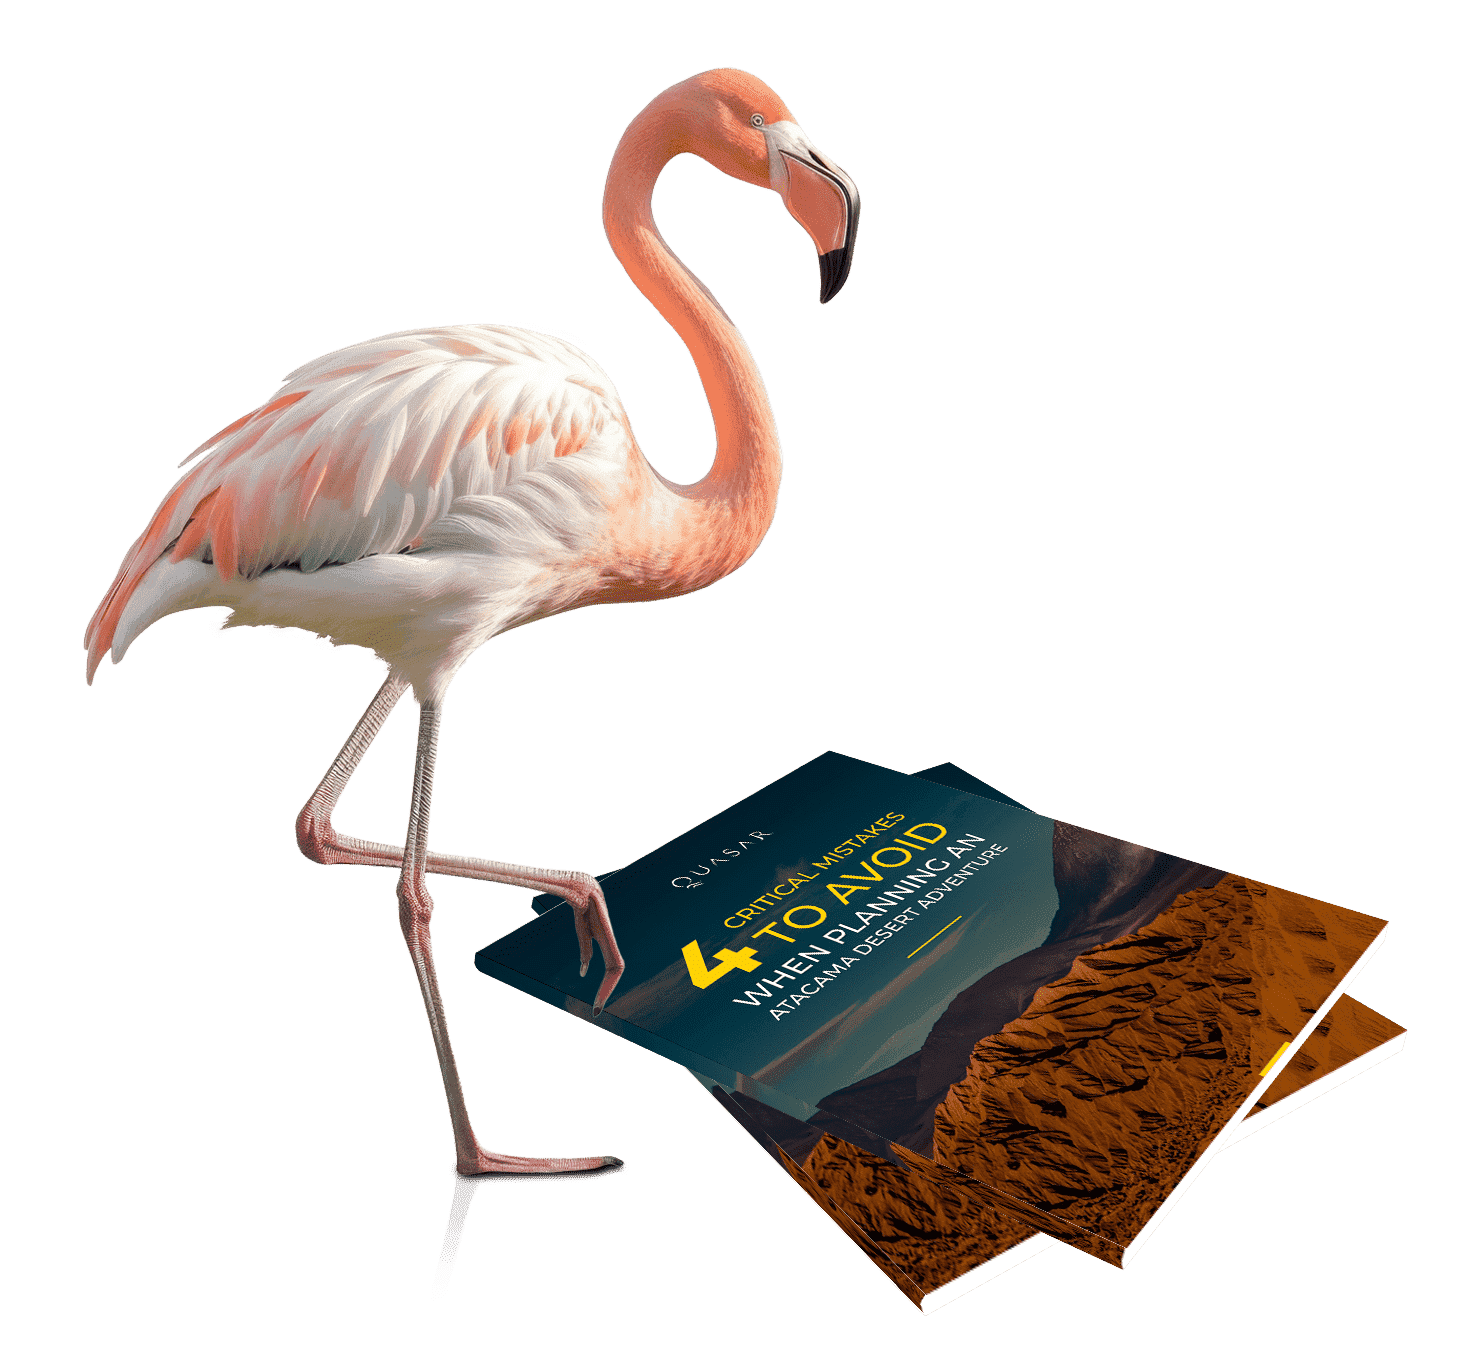 Flamingo standing on Patagonia Trip Guide